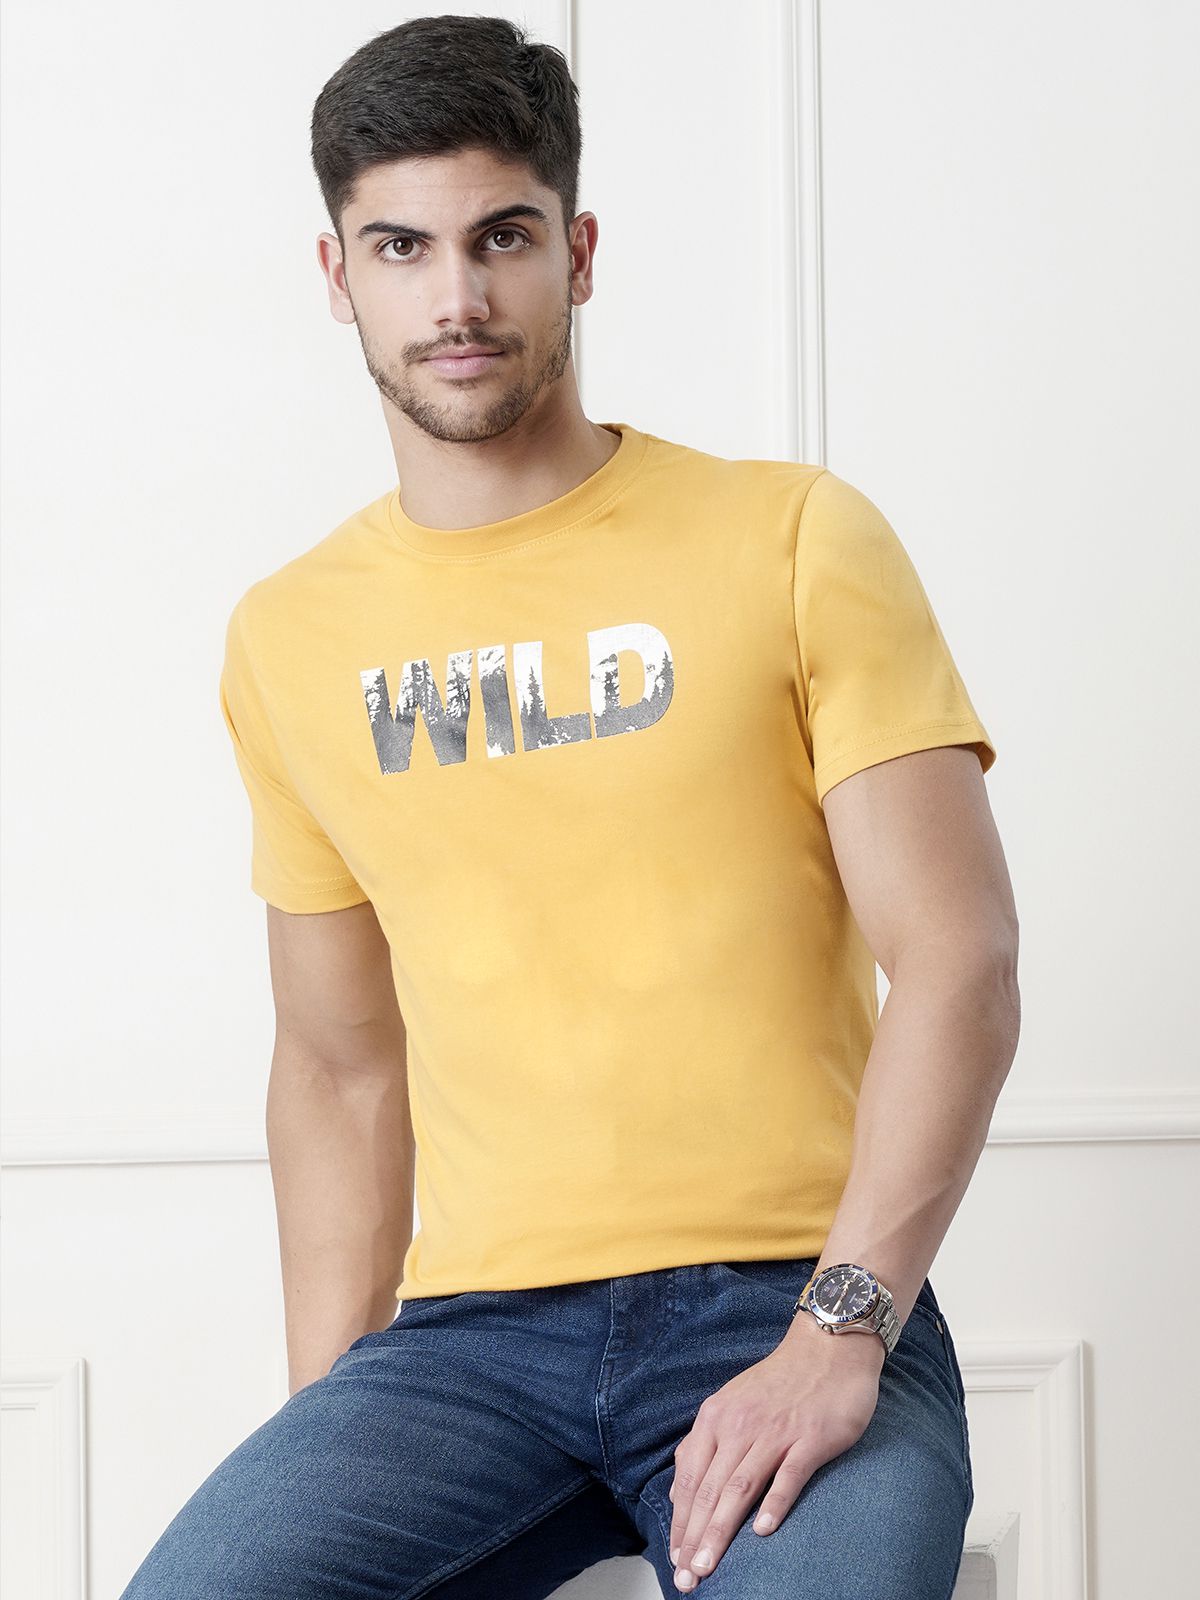     			UrbanMark Men 100% Cotton Regular Fit Round Half Sleeves Text Print T Shirt -Mustard